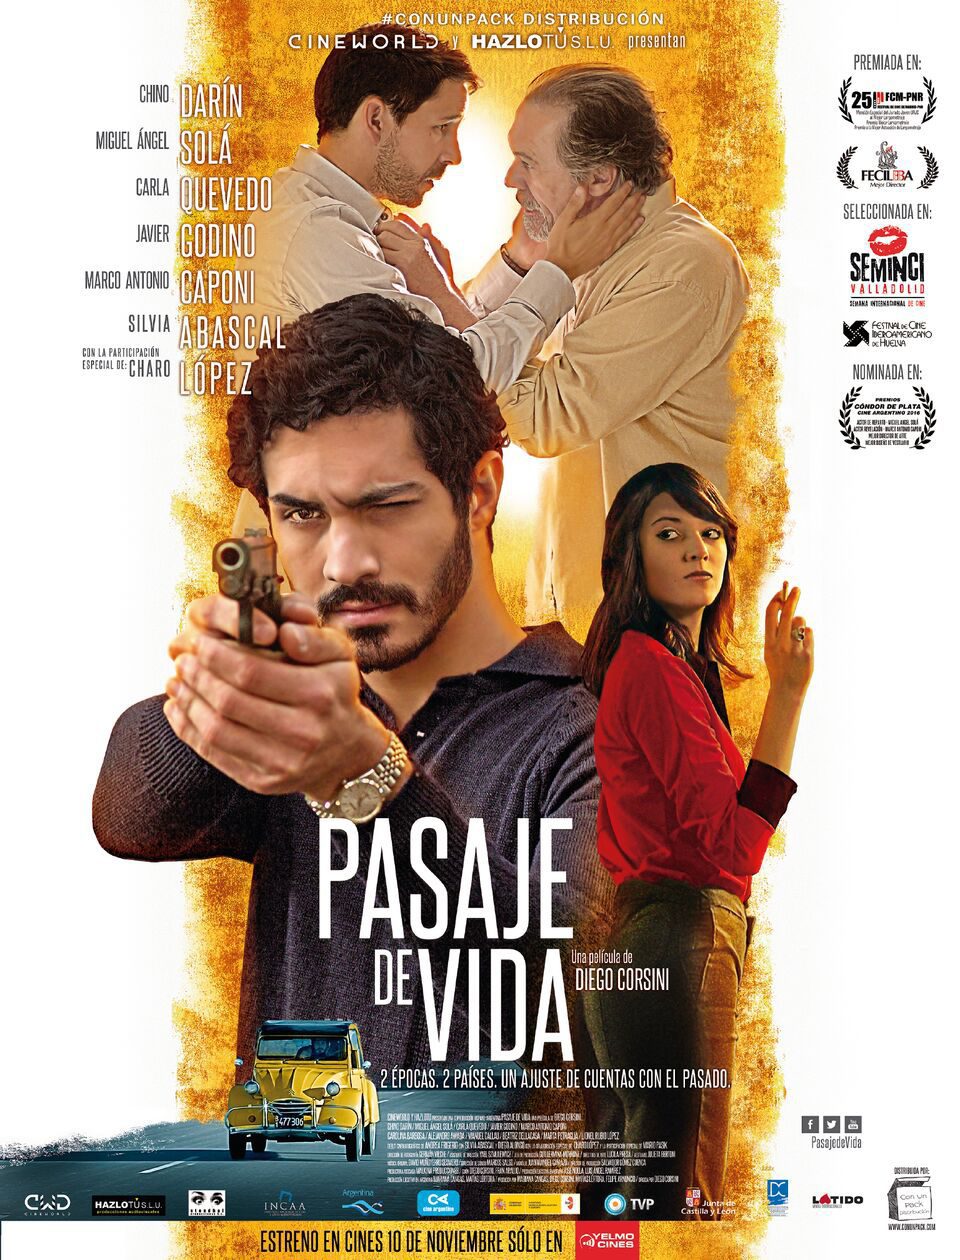 Poster of Pasaje de vida - Pasaje de vida